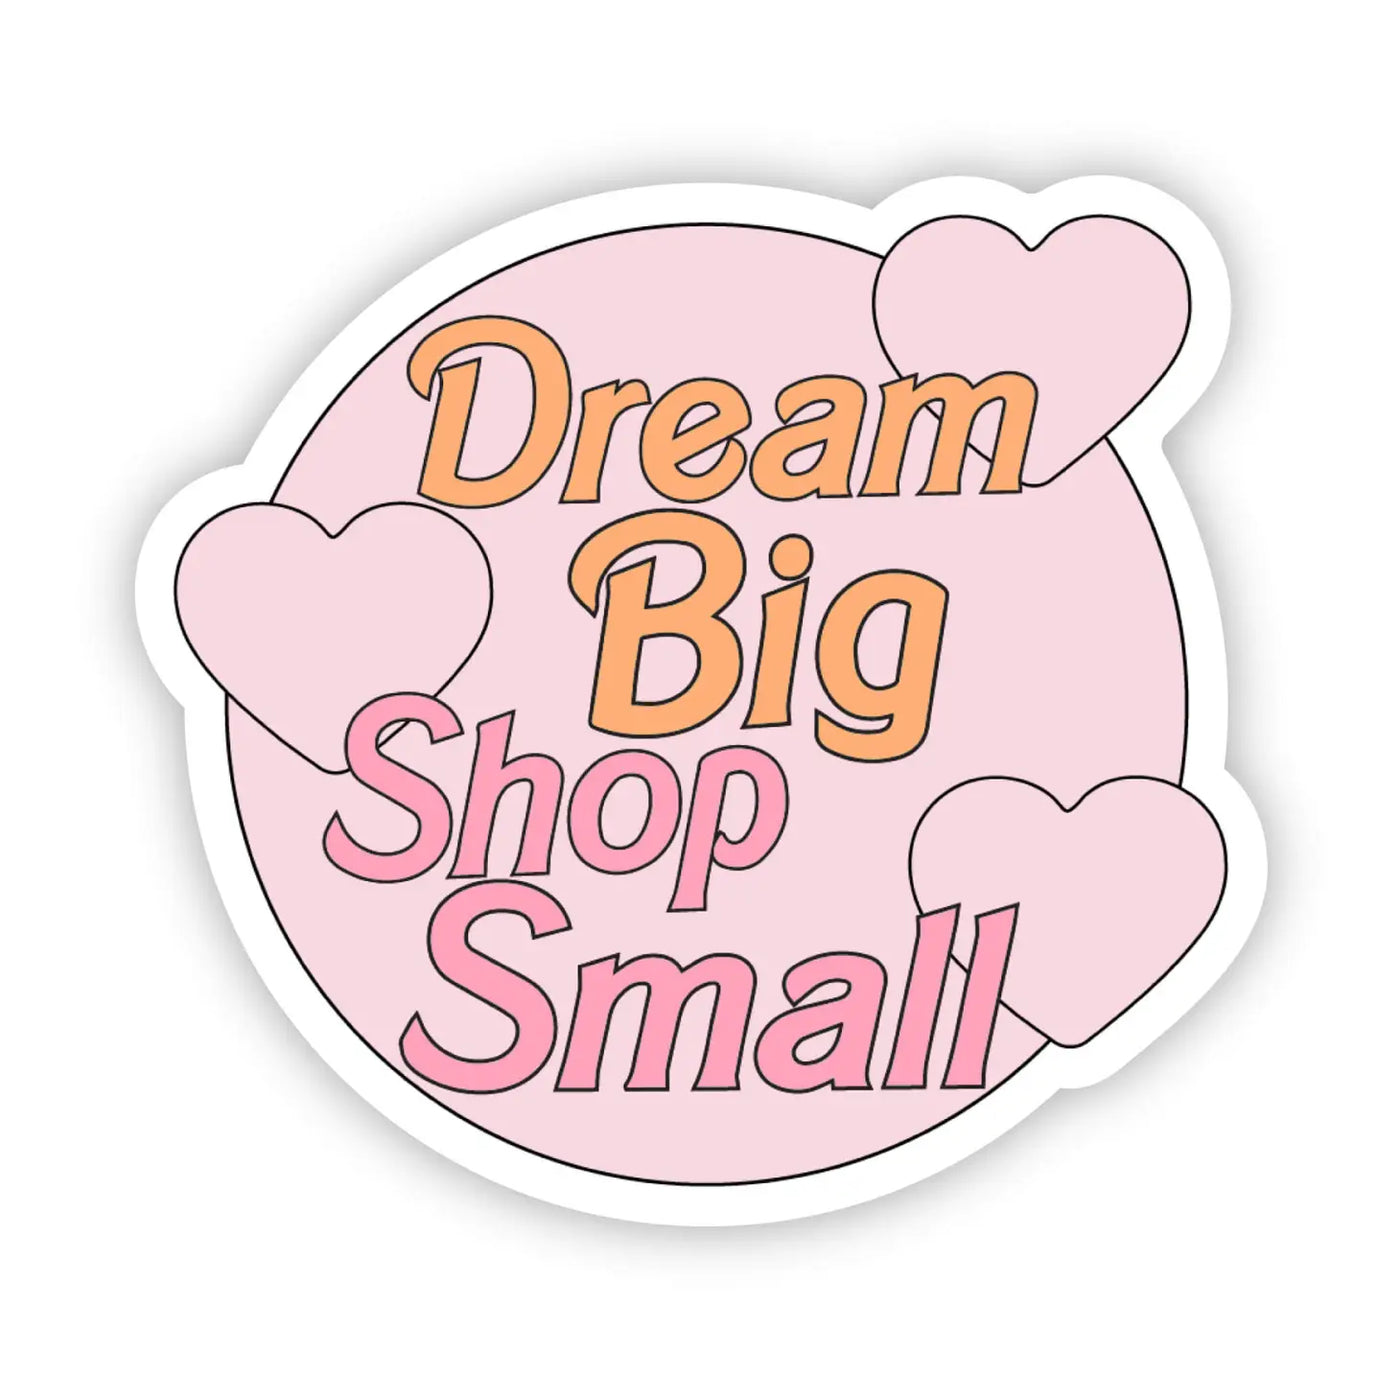 Dream big and shop small sticker cute 90s kid gift for her stylish fun decorative sticker